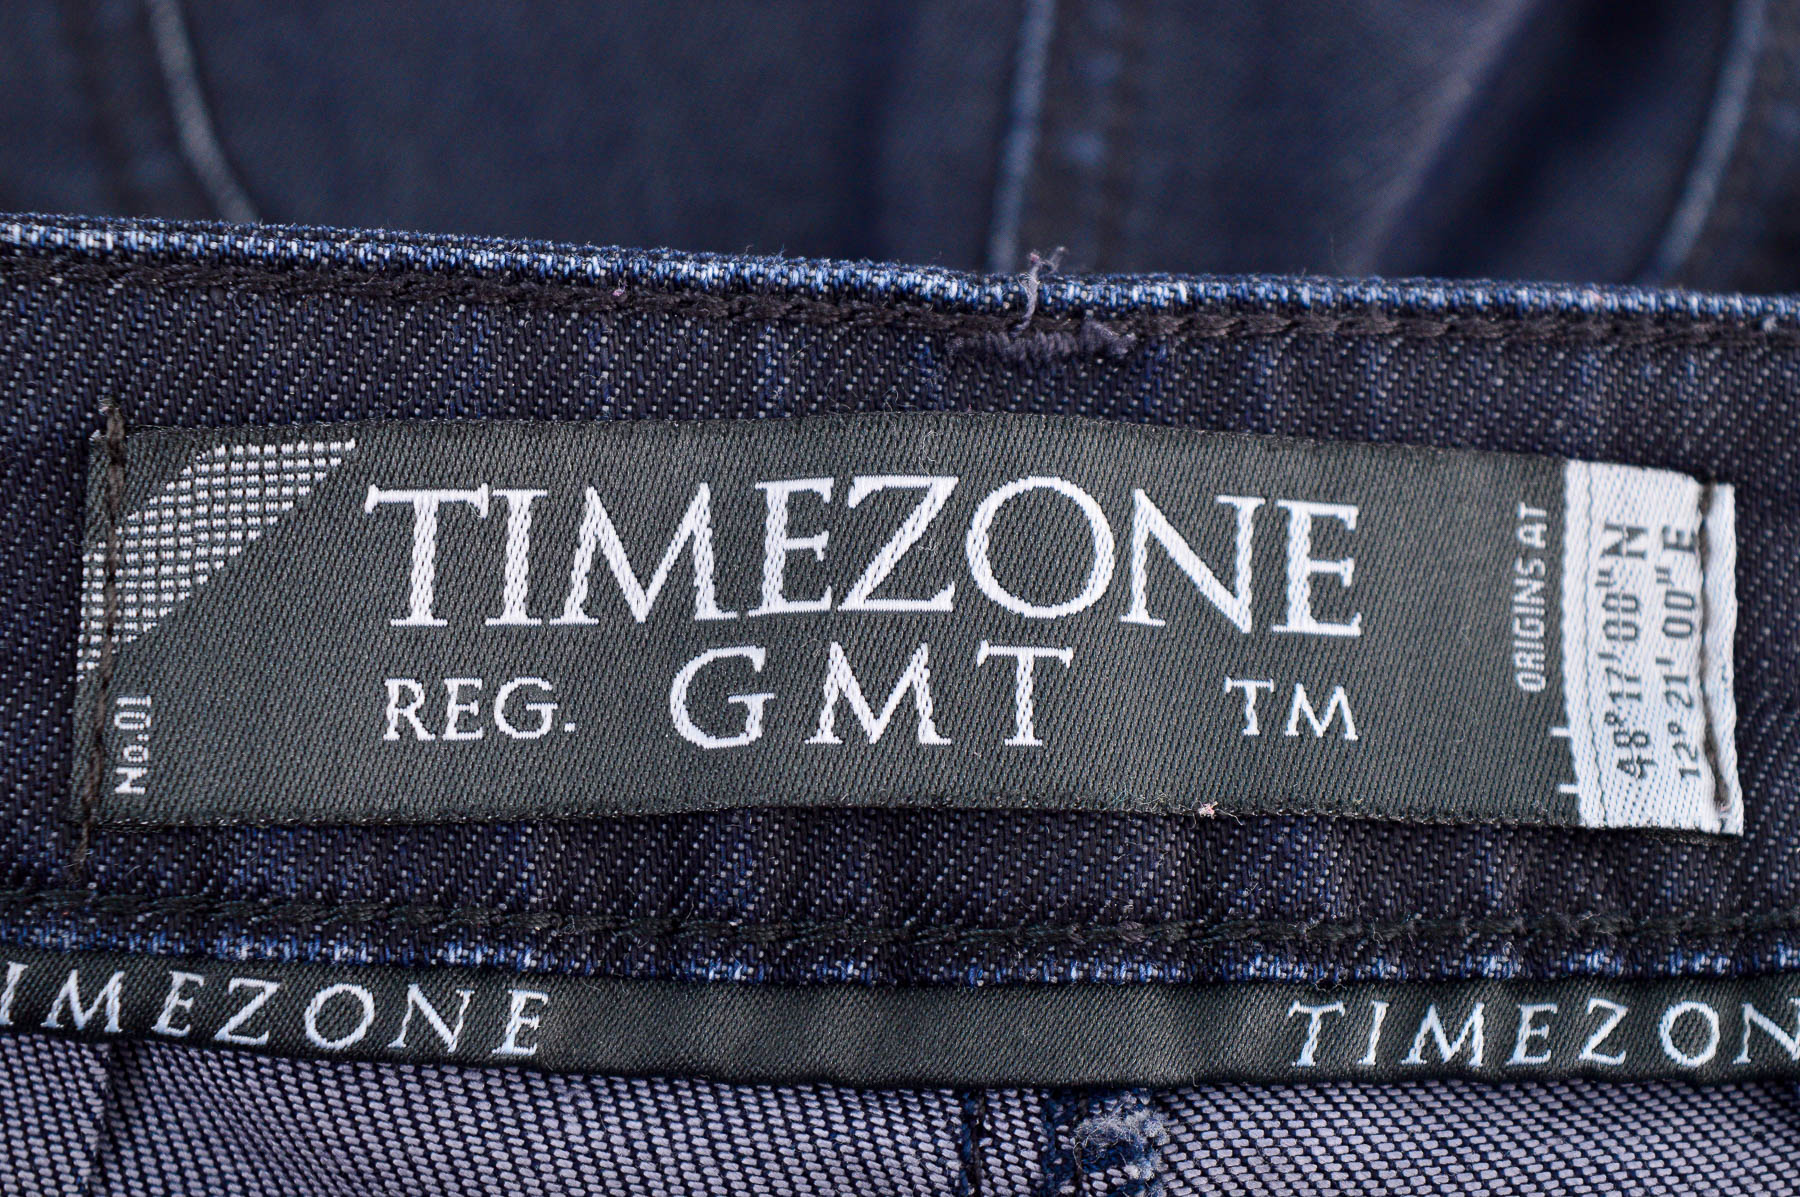 Men's jeans - Timezone - 2